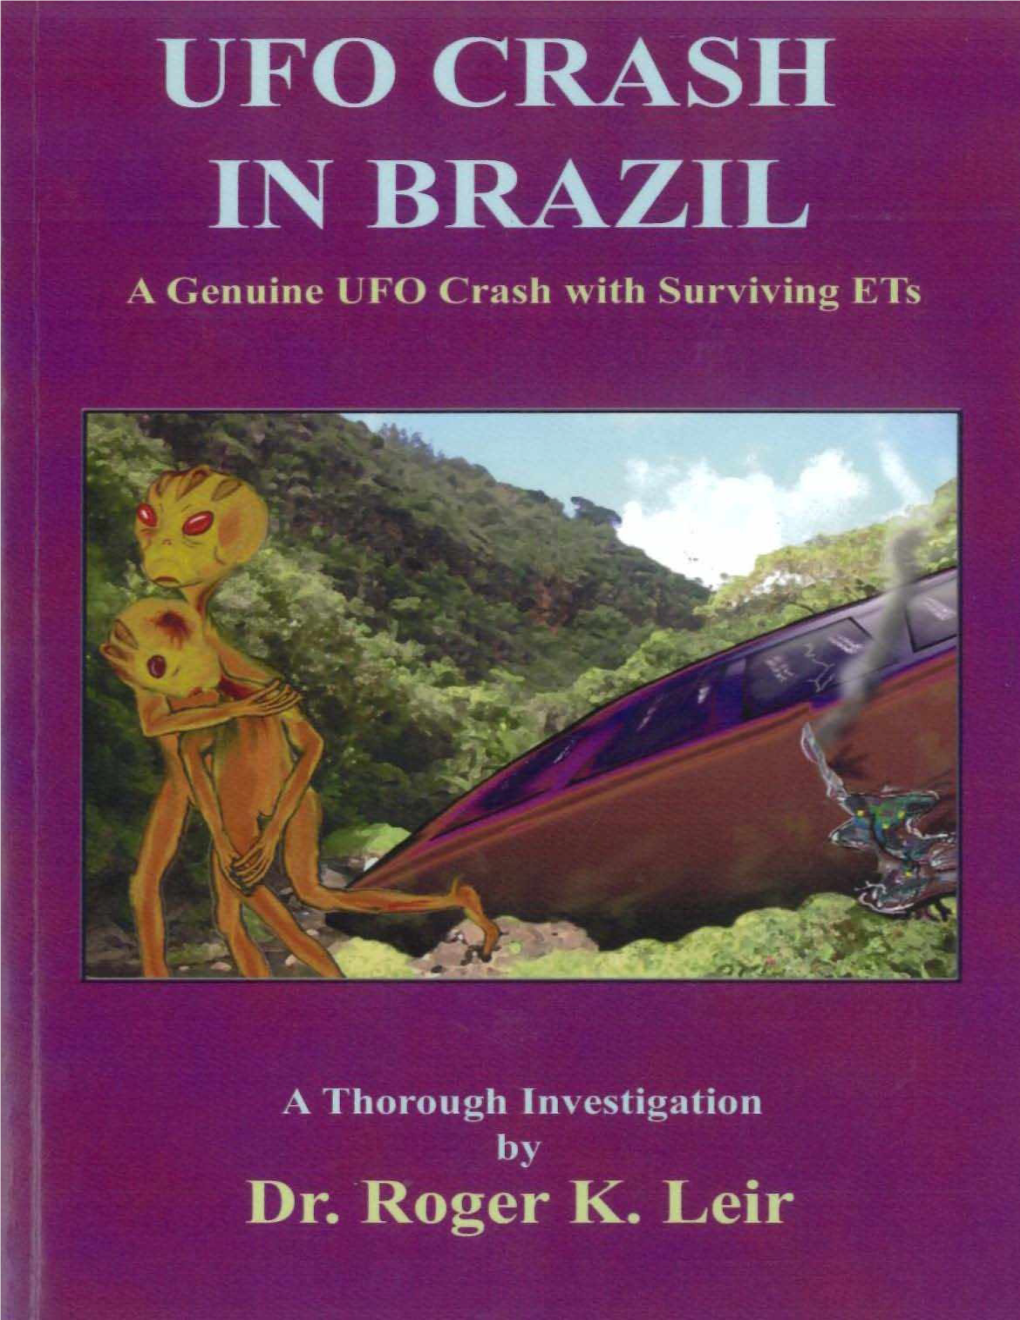 UFO CRASH in BRAZIL a Genuine UFO Crash with Surviving Ets